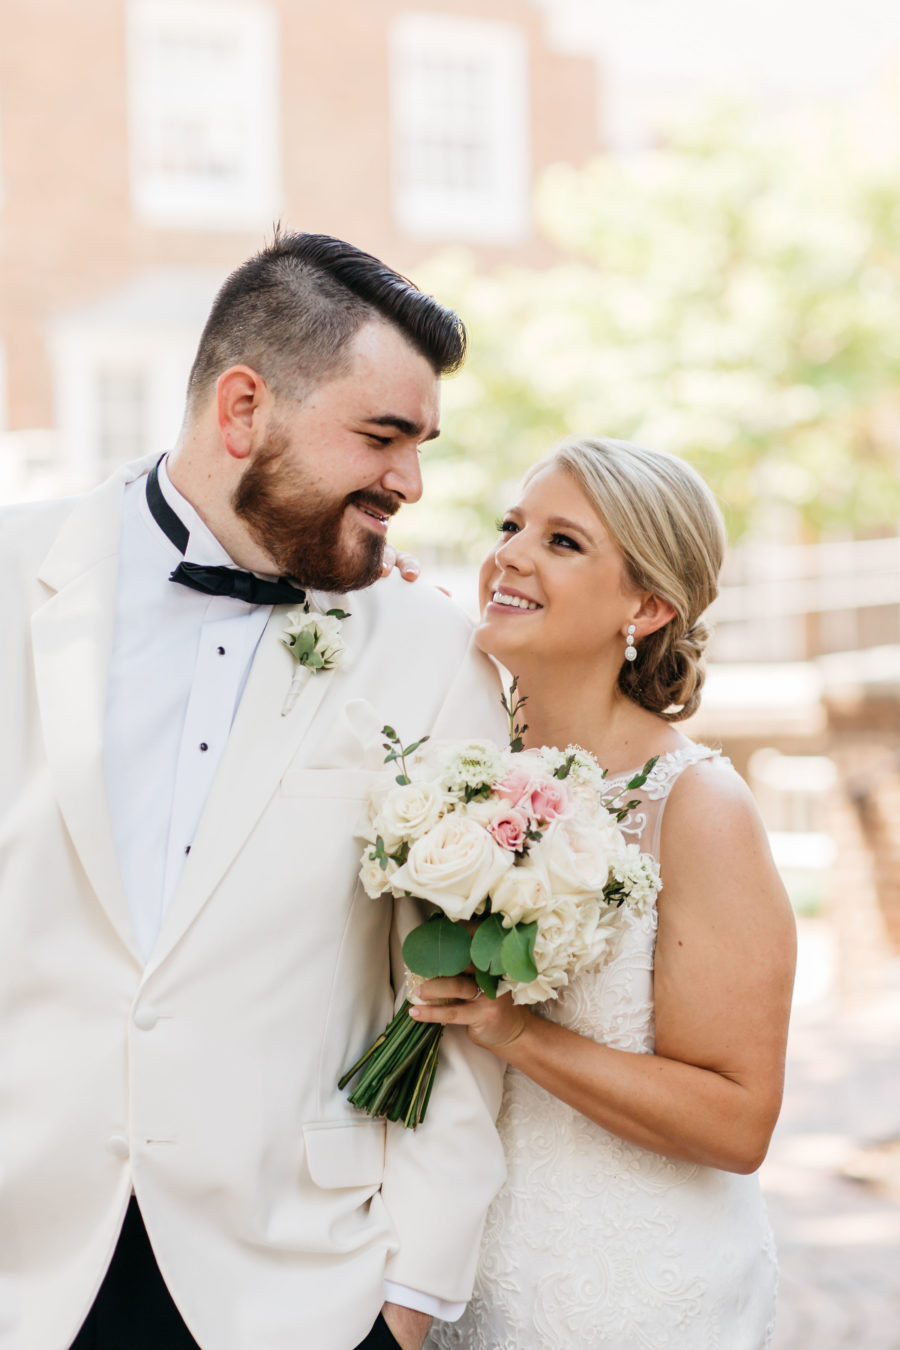 Simply Elegant Nashville Wedding captured by Meredith Teasley